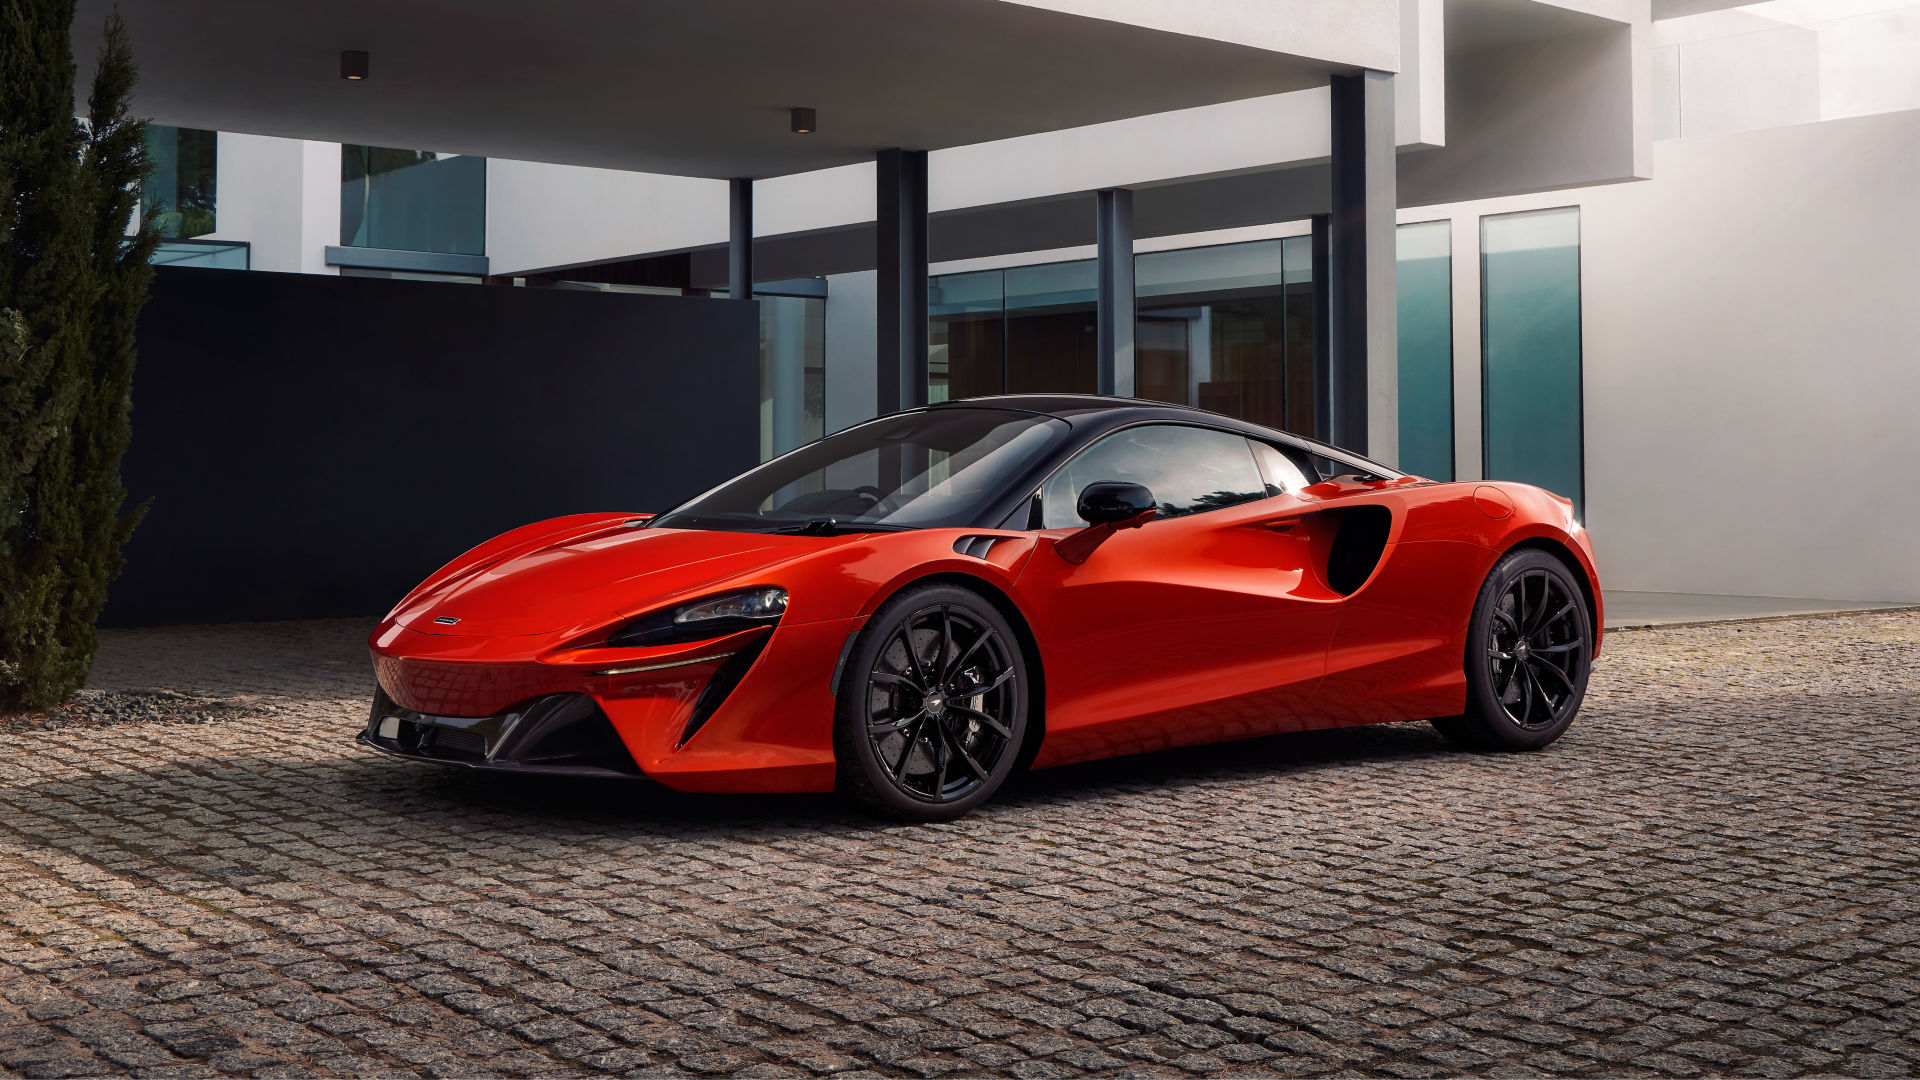 McLaren Artura - New High-Performance Hybrid Supercar | McLaren Automotive